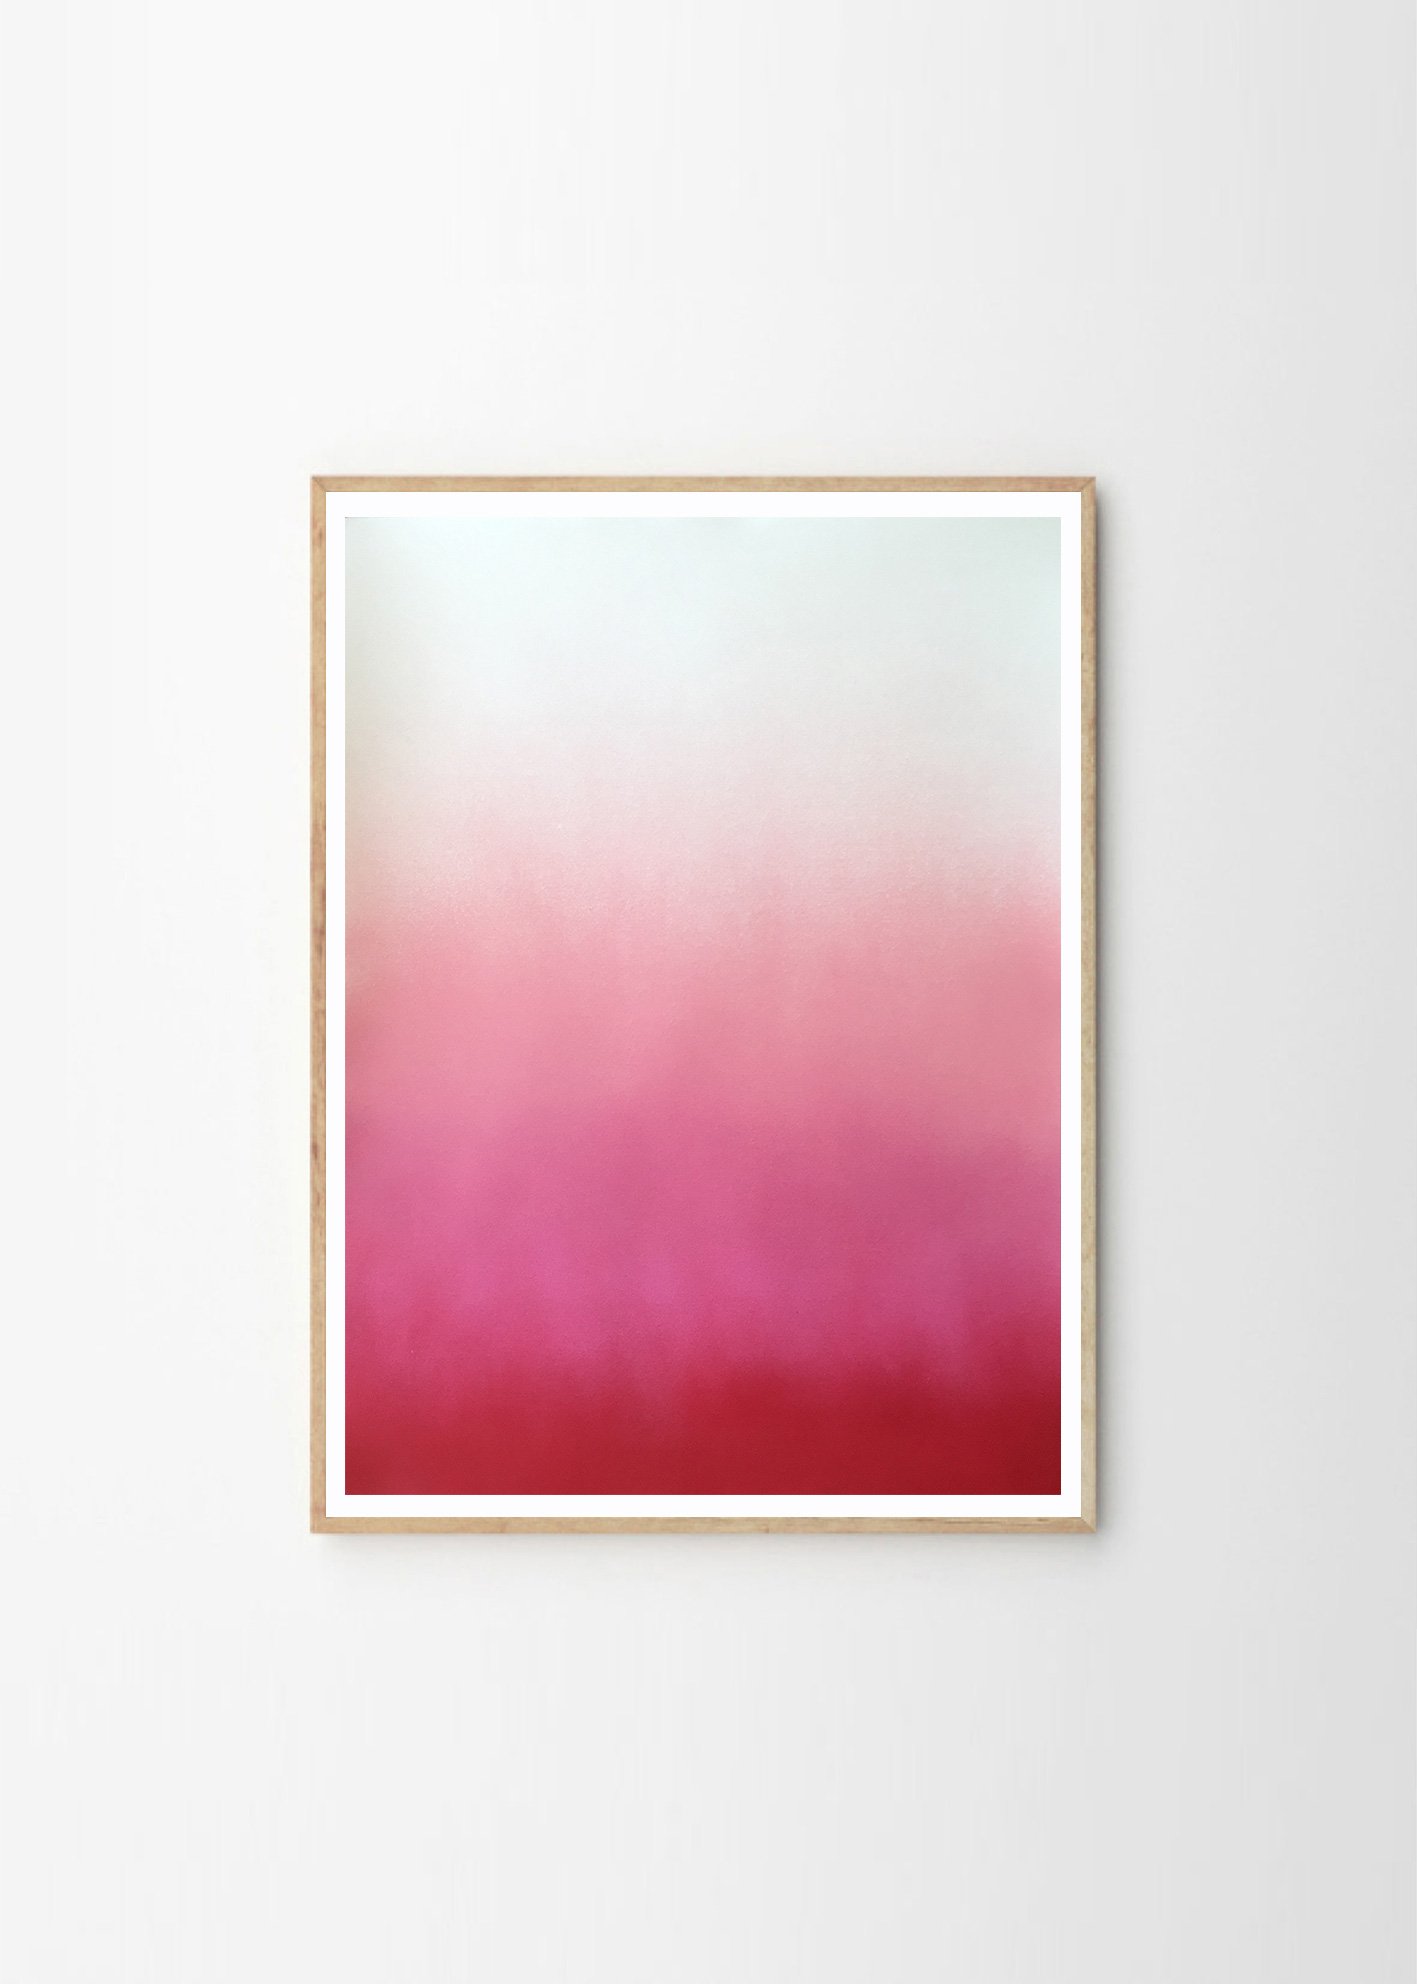 anne-nowak-hazy-pink-frame-wood (1).jpg